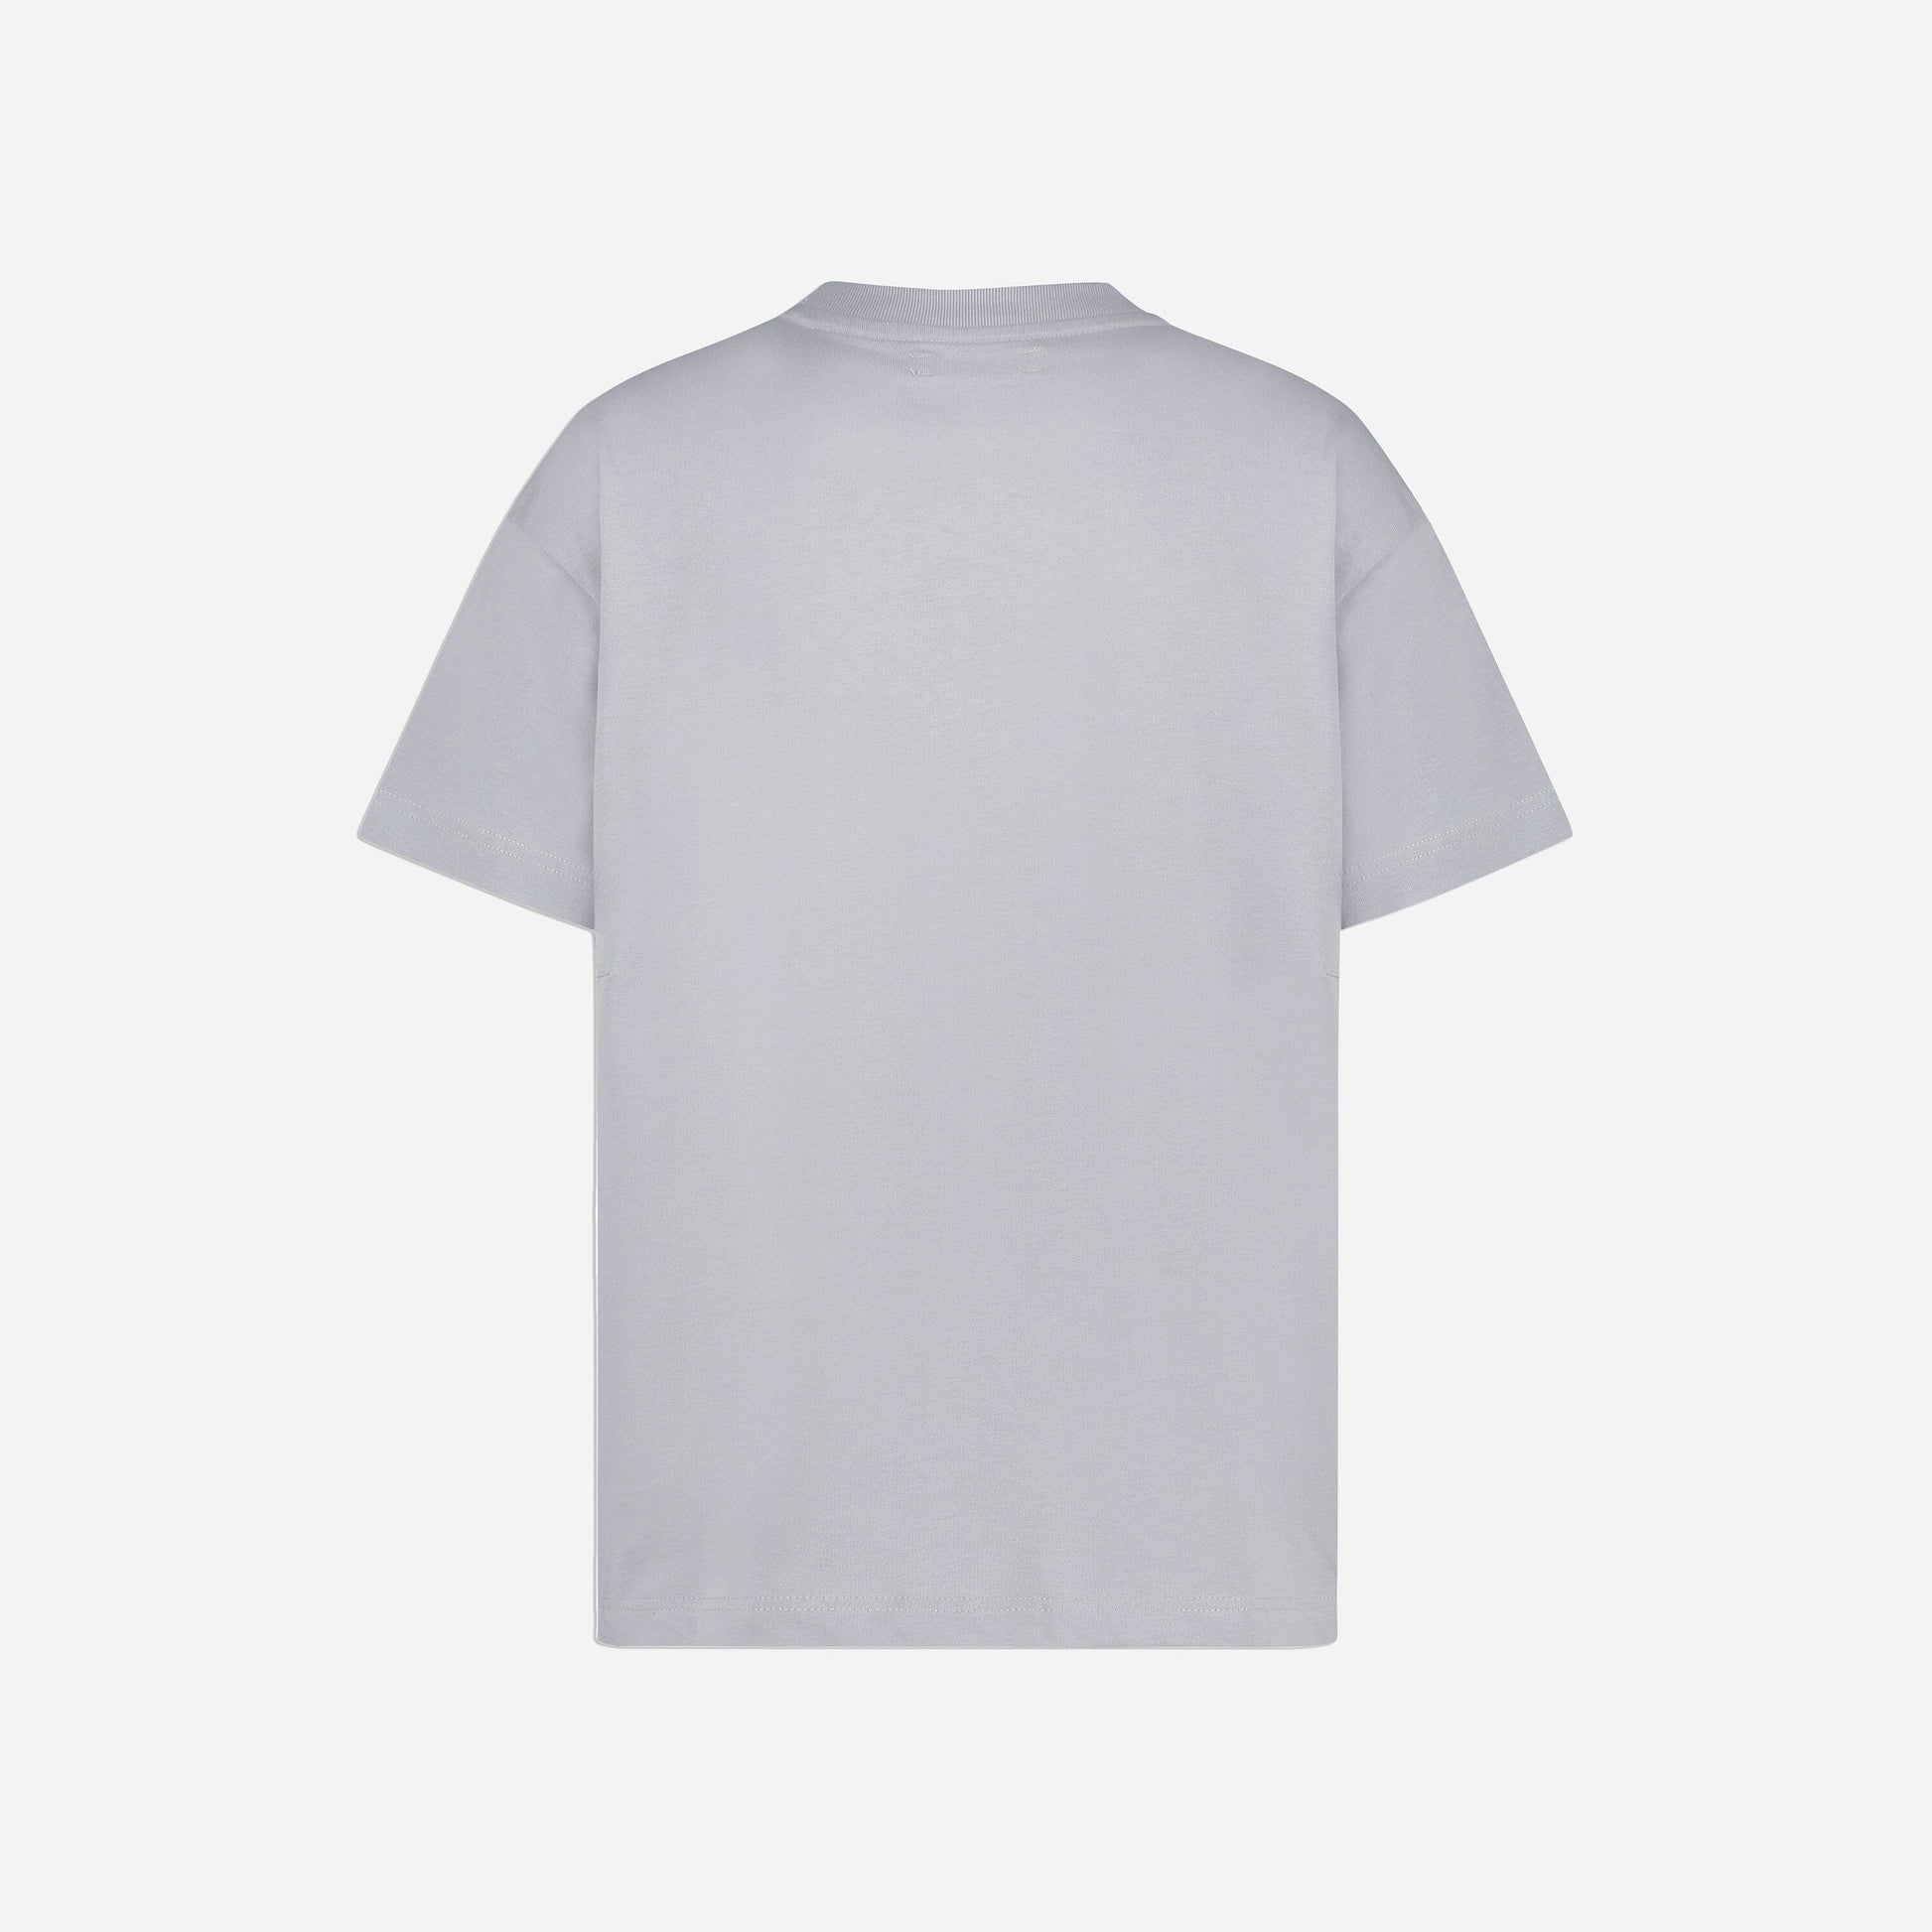 Essential T-Shirt in Concrete Grey